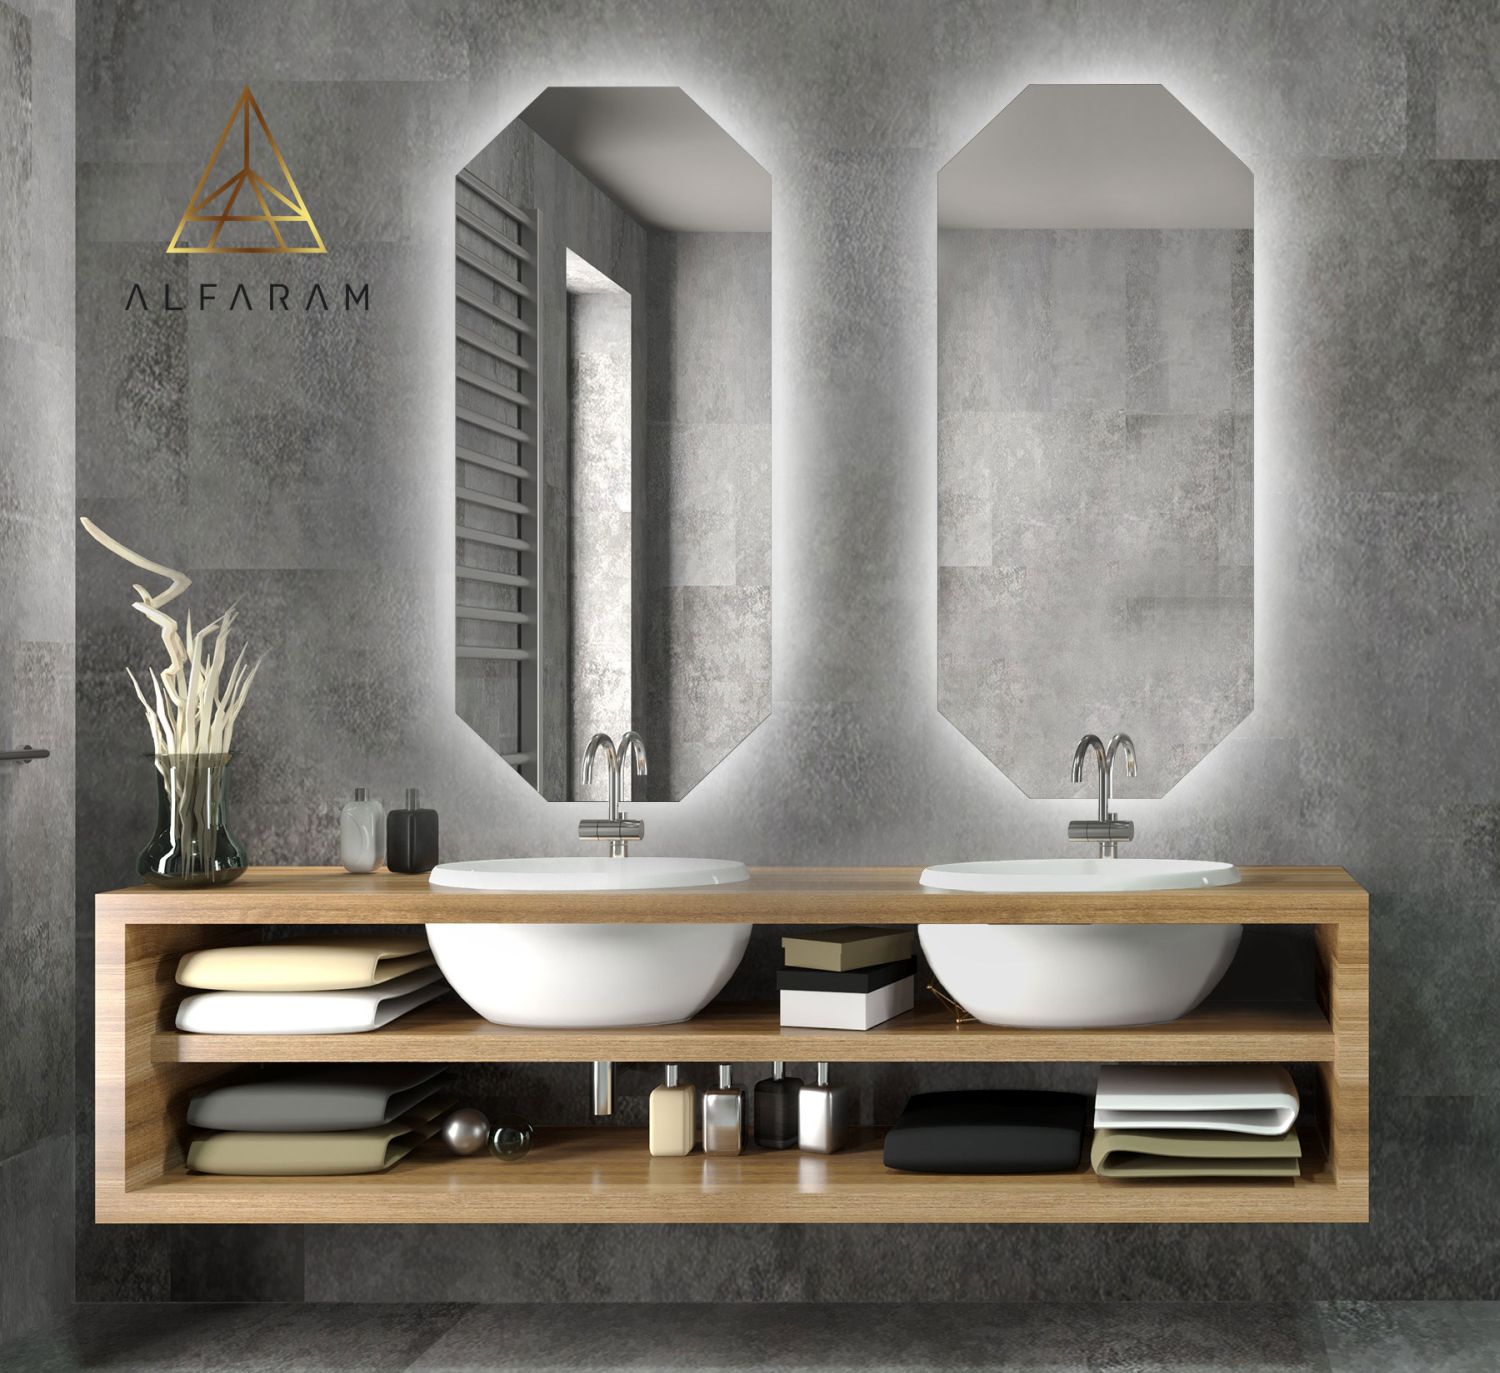 Eleganckie lustra łazienkowe Alfaram